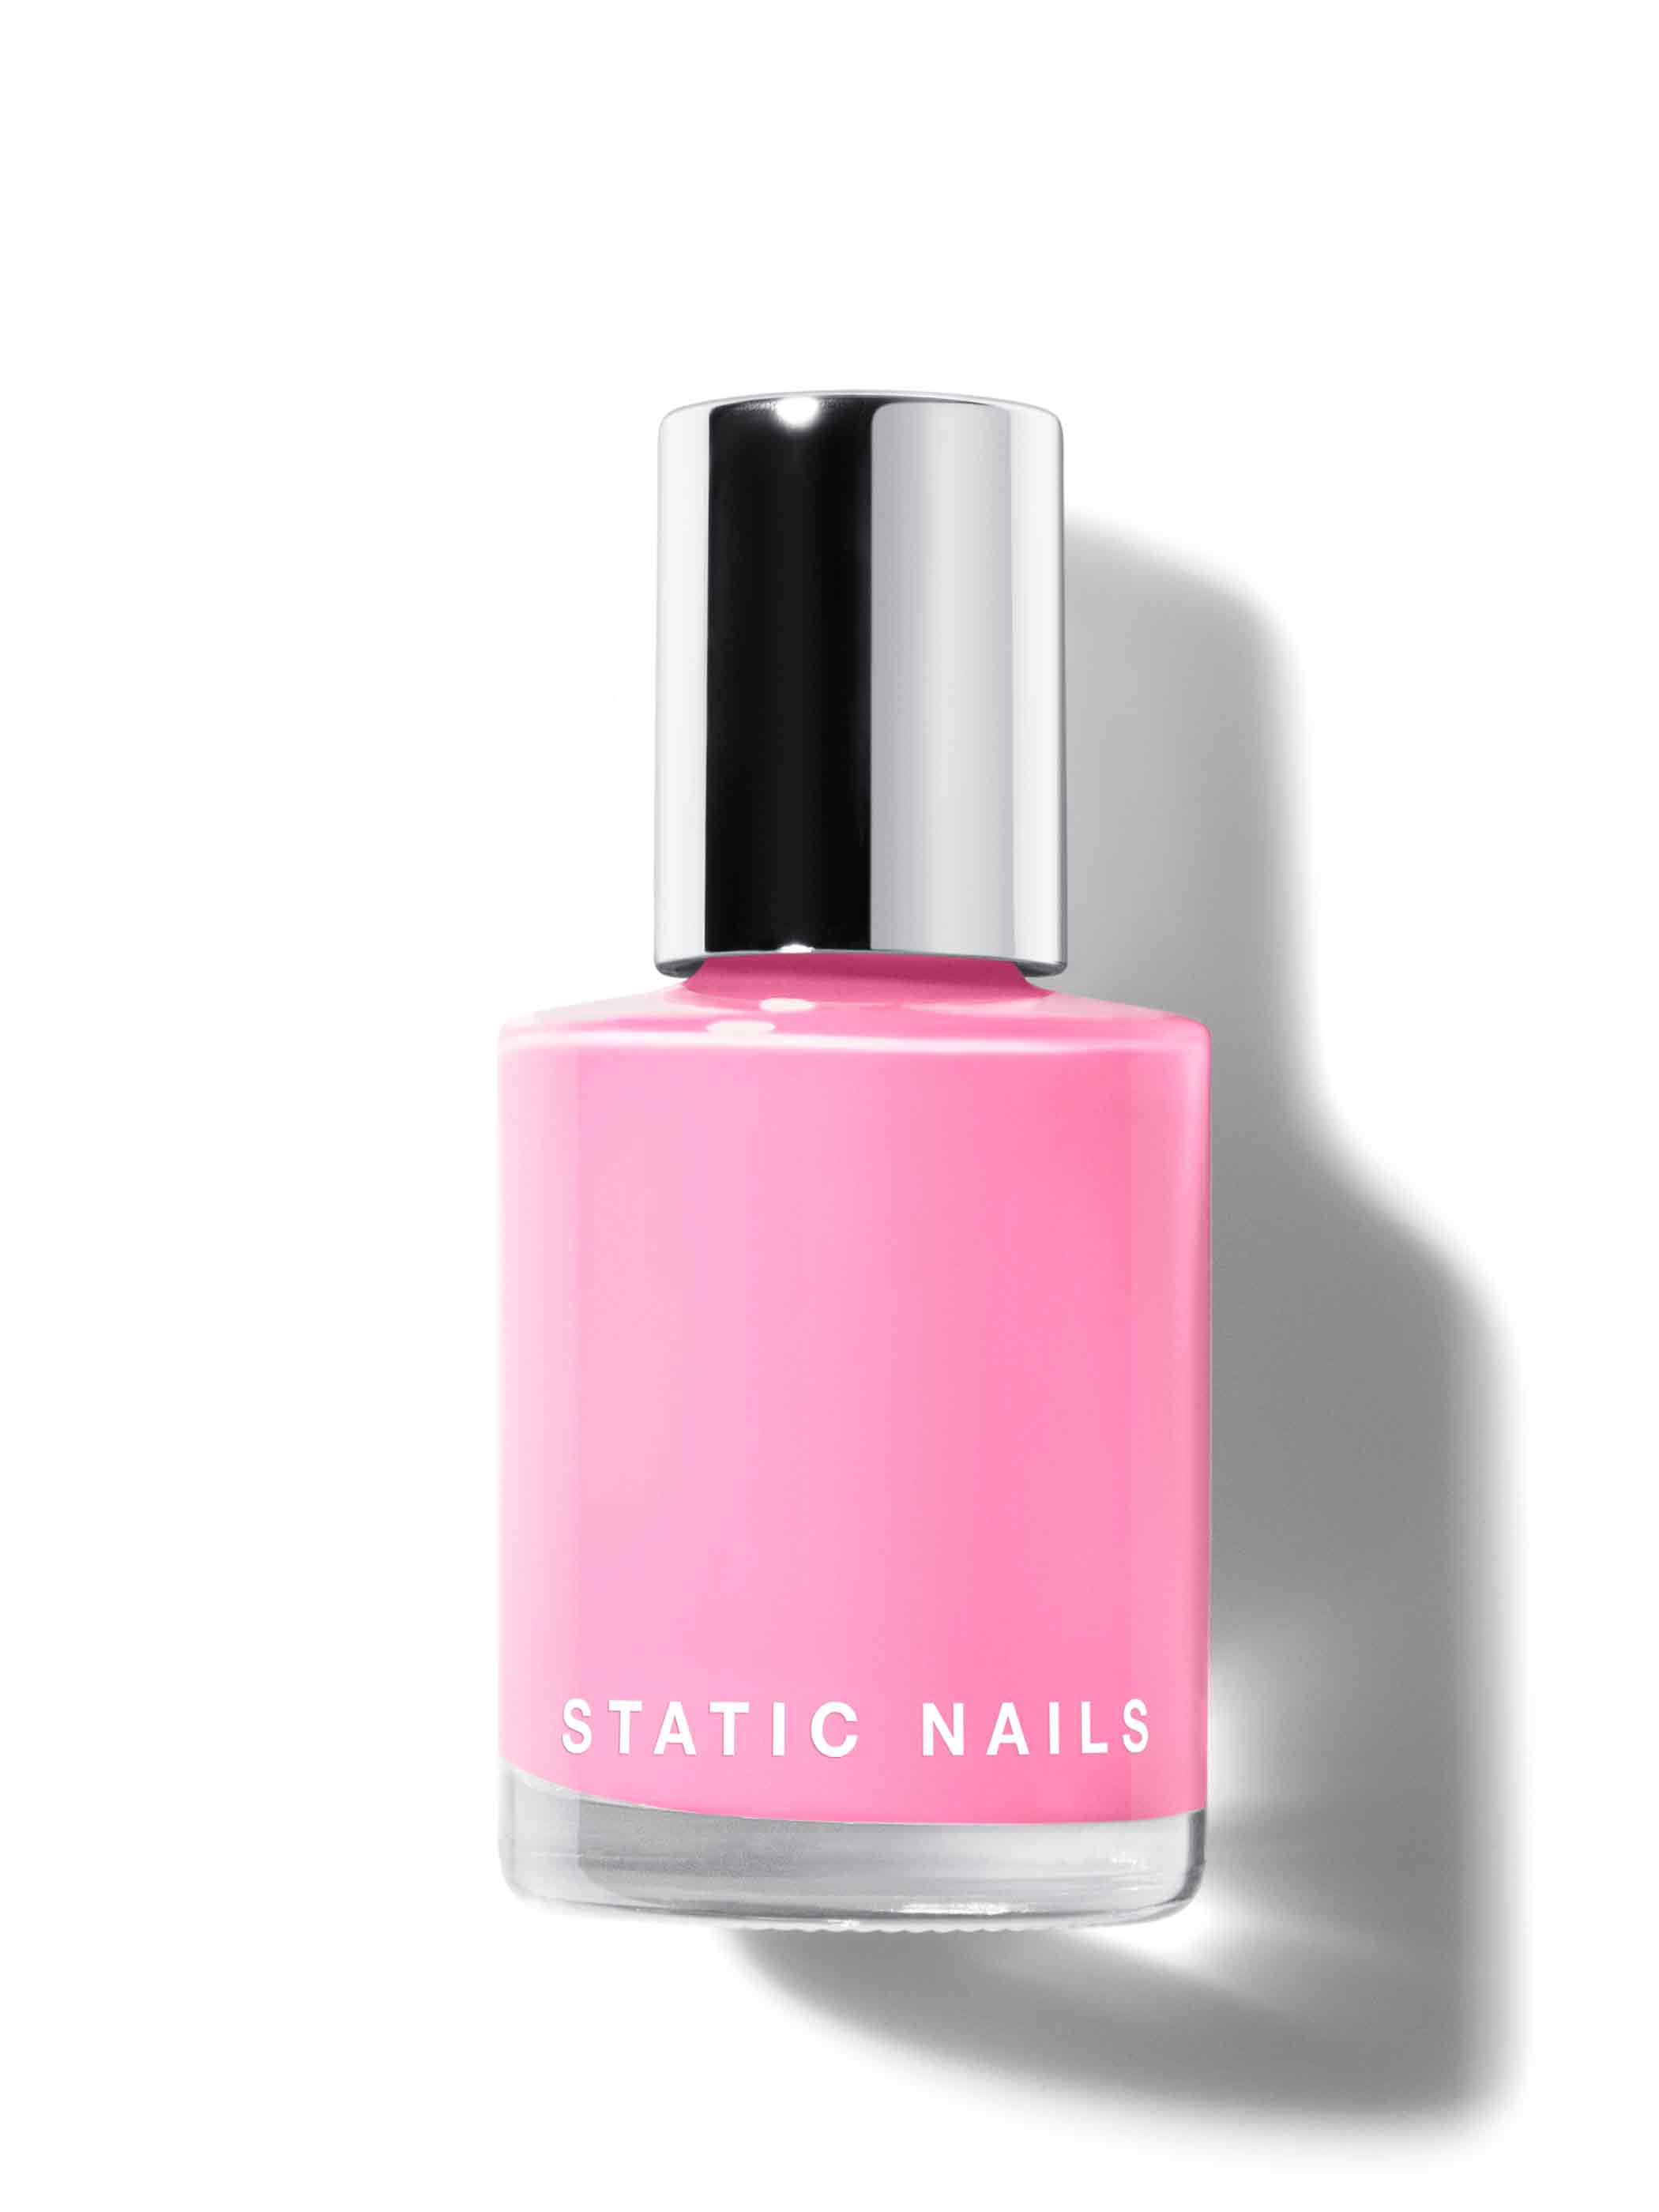 Neon pastel pink, full-coverage nail polish